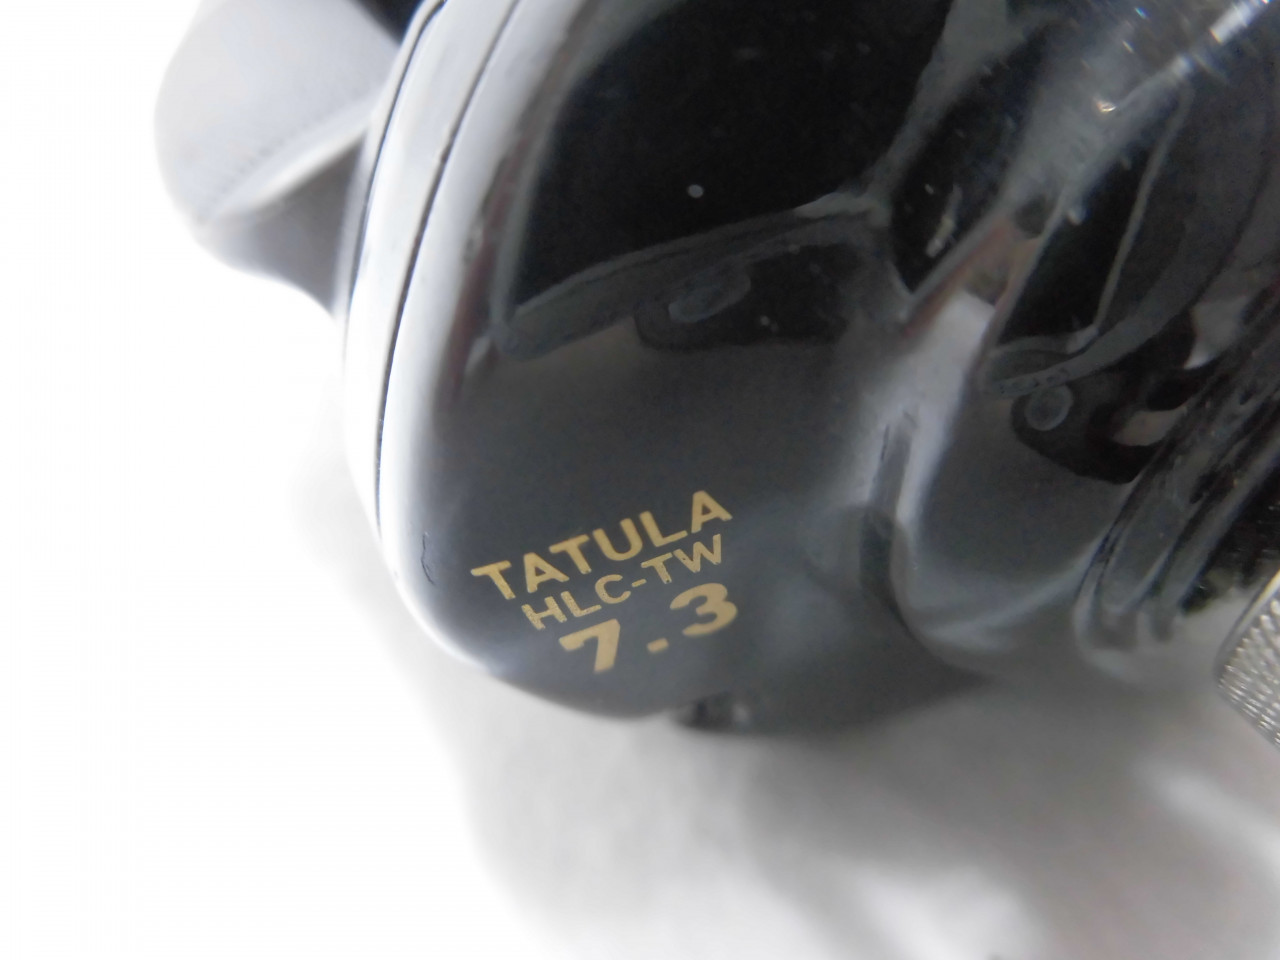 Daiwa Tatura Hlc Tw7 3 Bait Reel From Stylish Anglers Japan Ebay